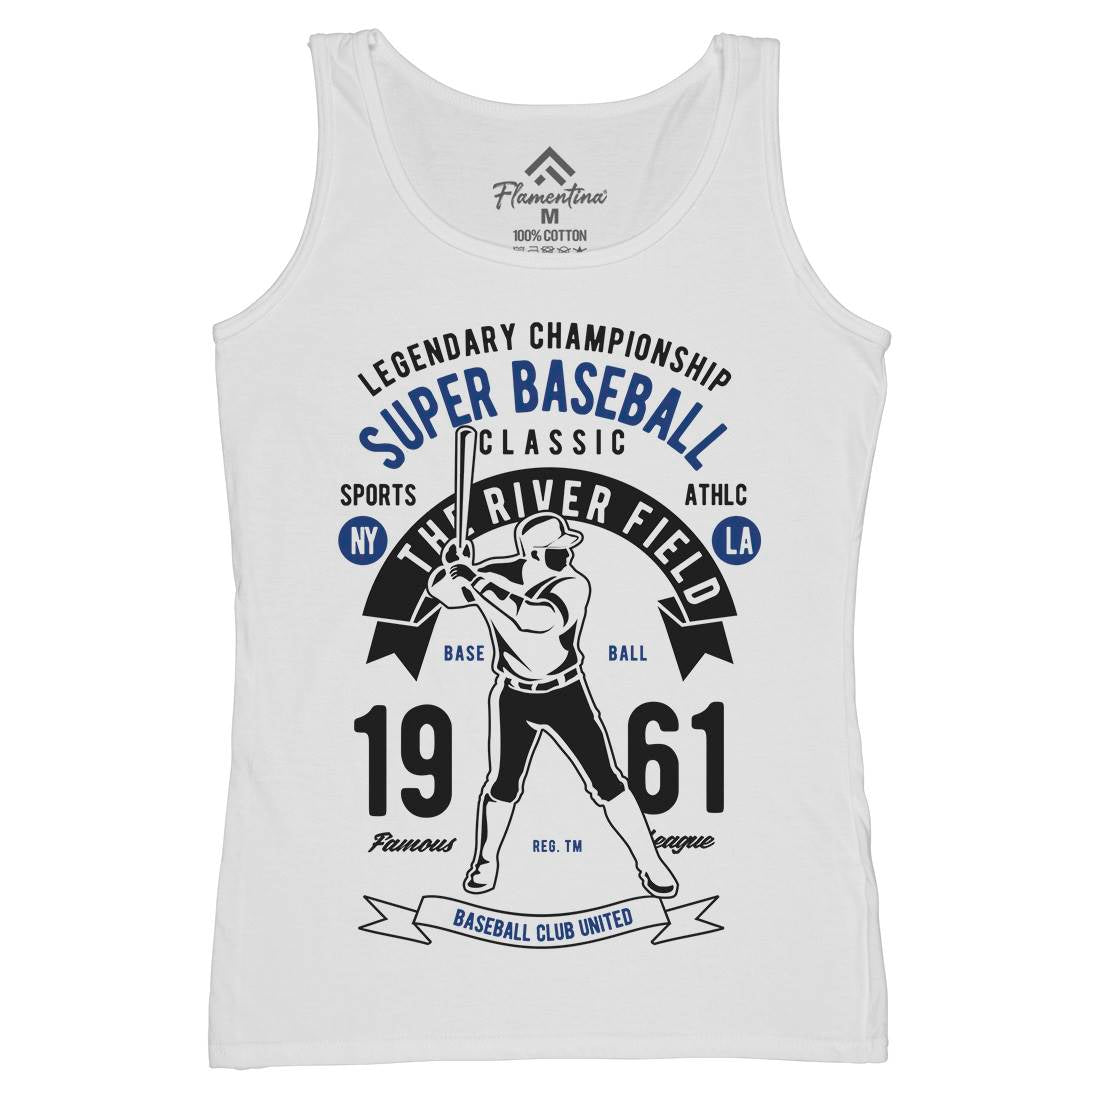 Super Baseball Womens Organic Tank Top Vest Sport B455